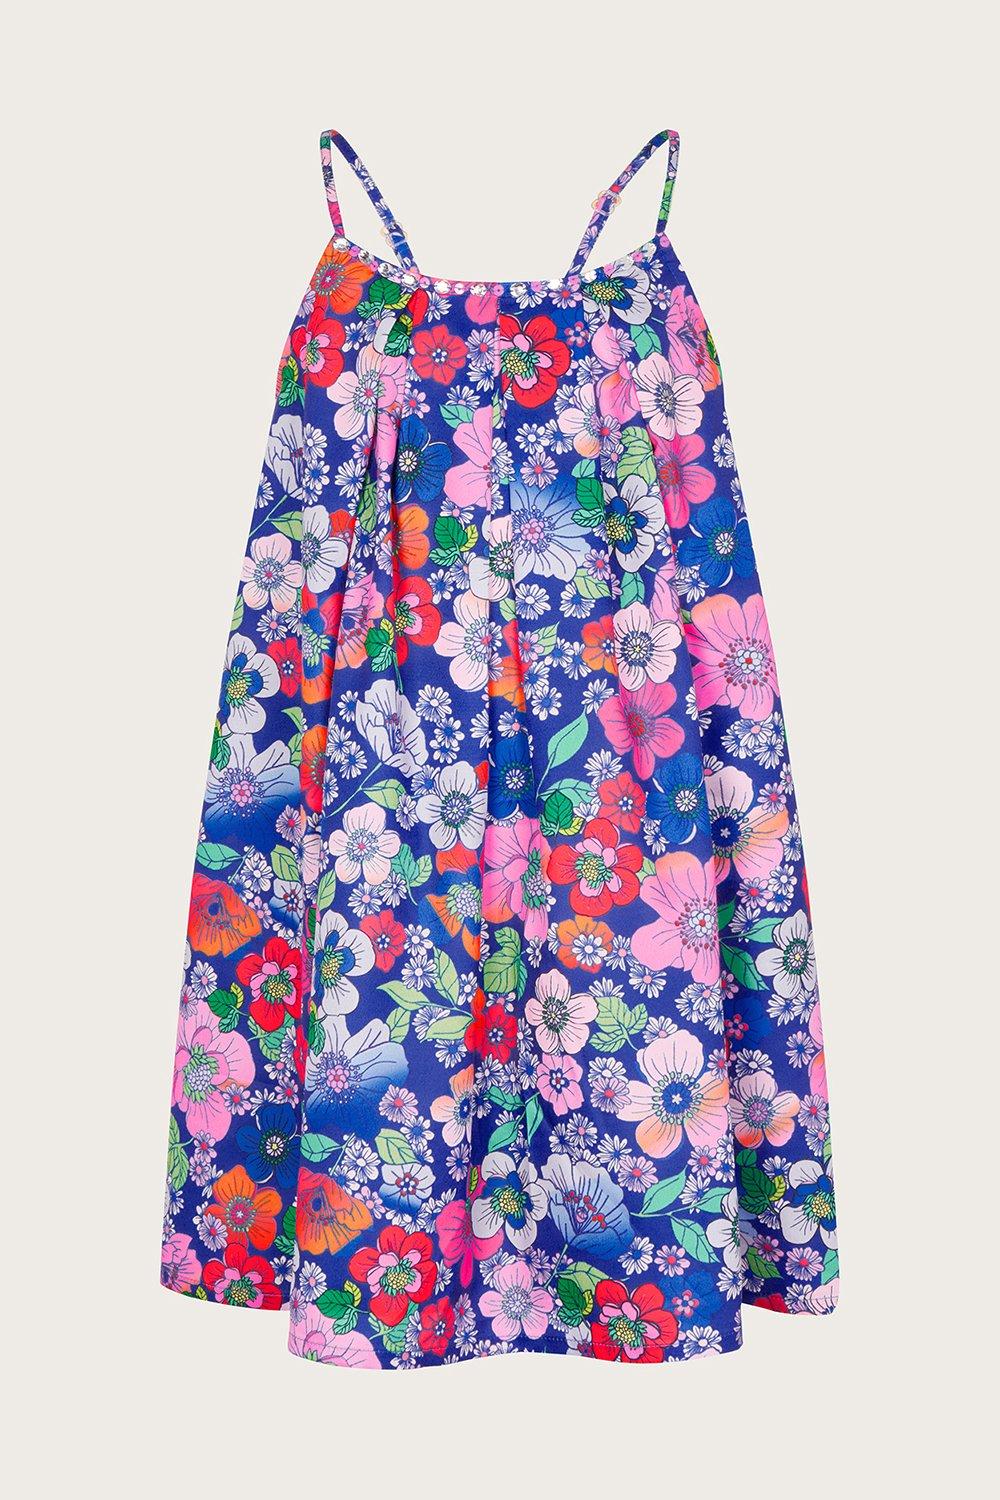 Retro Floral Dress